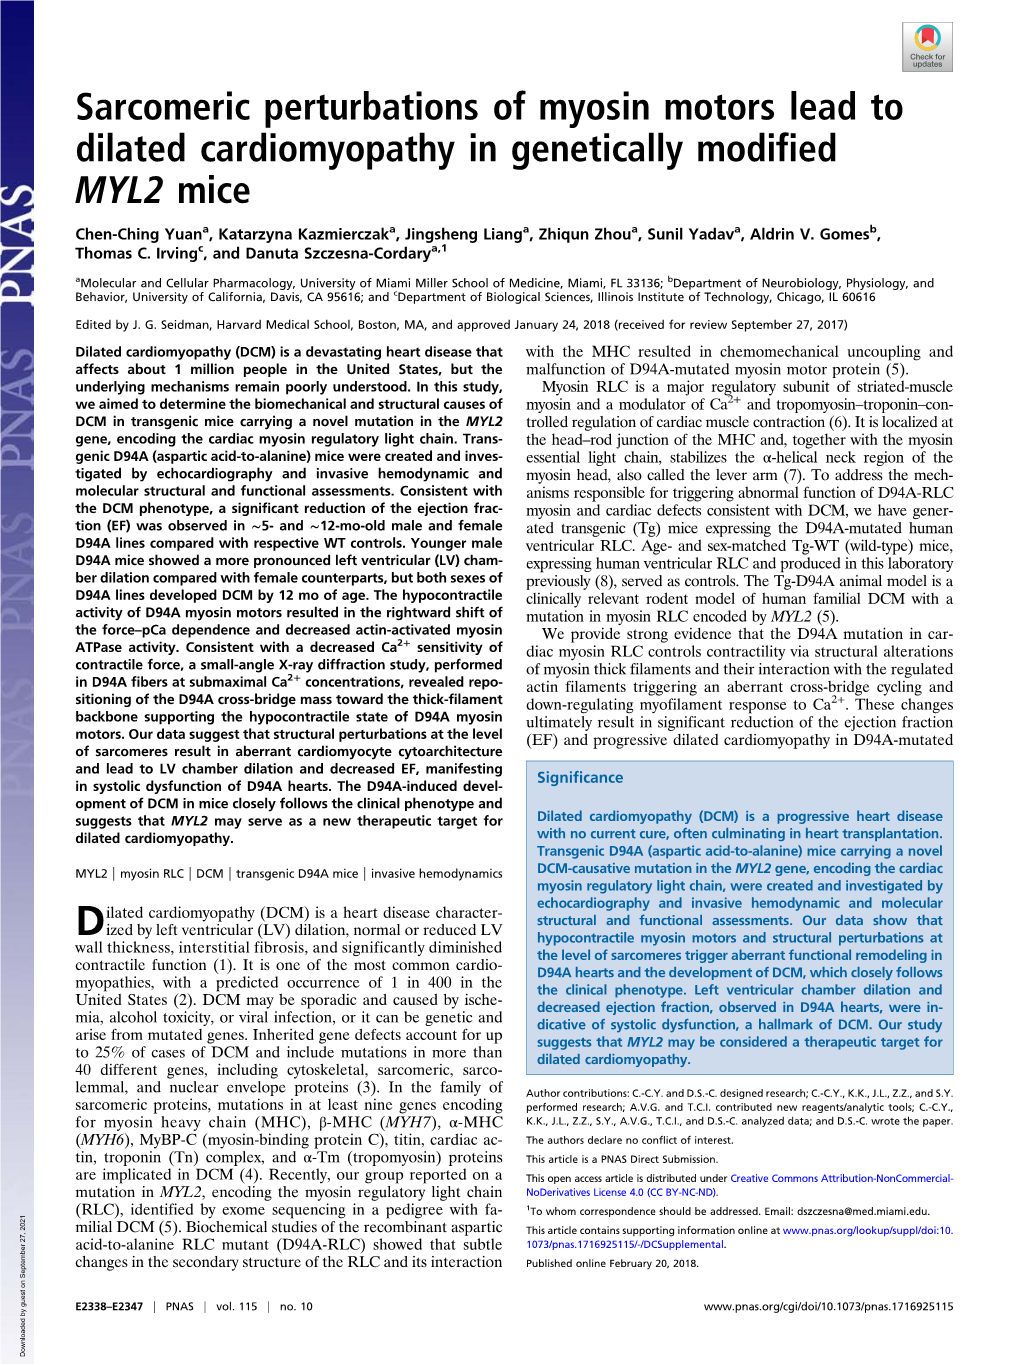 Sarcomeric Perturbations of Myosin Motors Lead to Dilated Cardiomyopathy in Genetically Modified MYL2 Mice